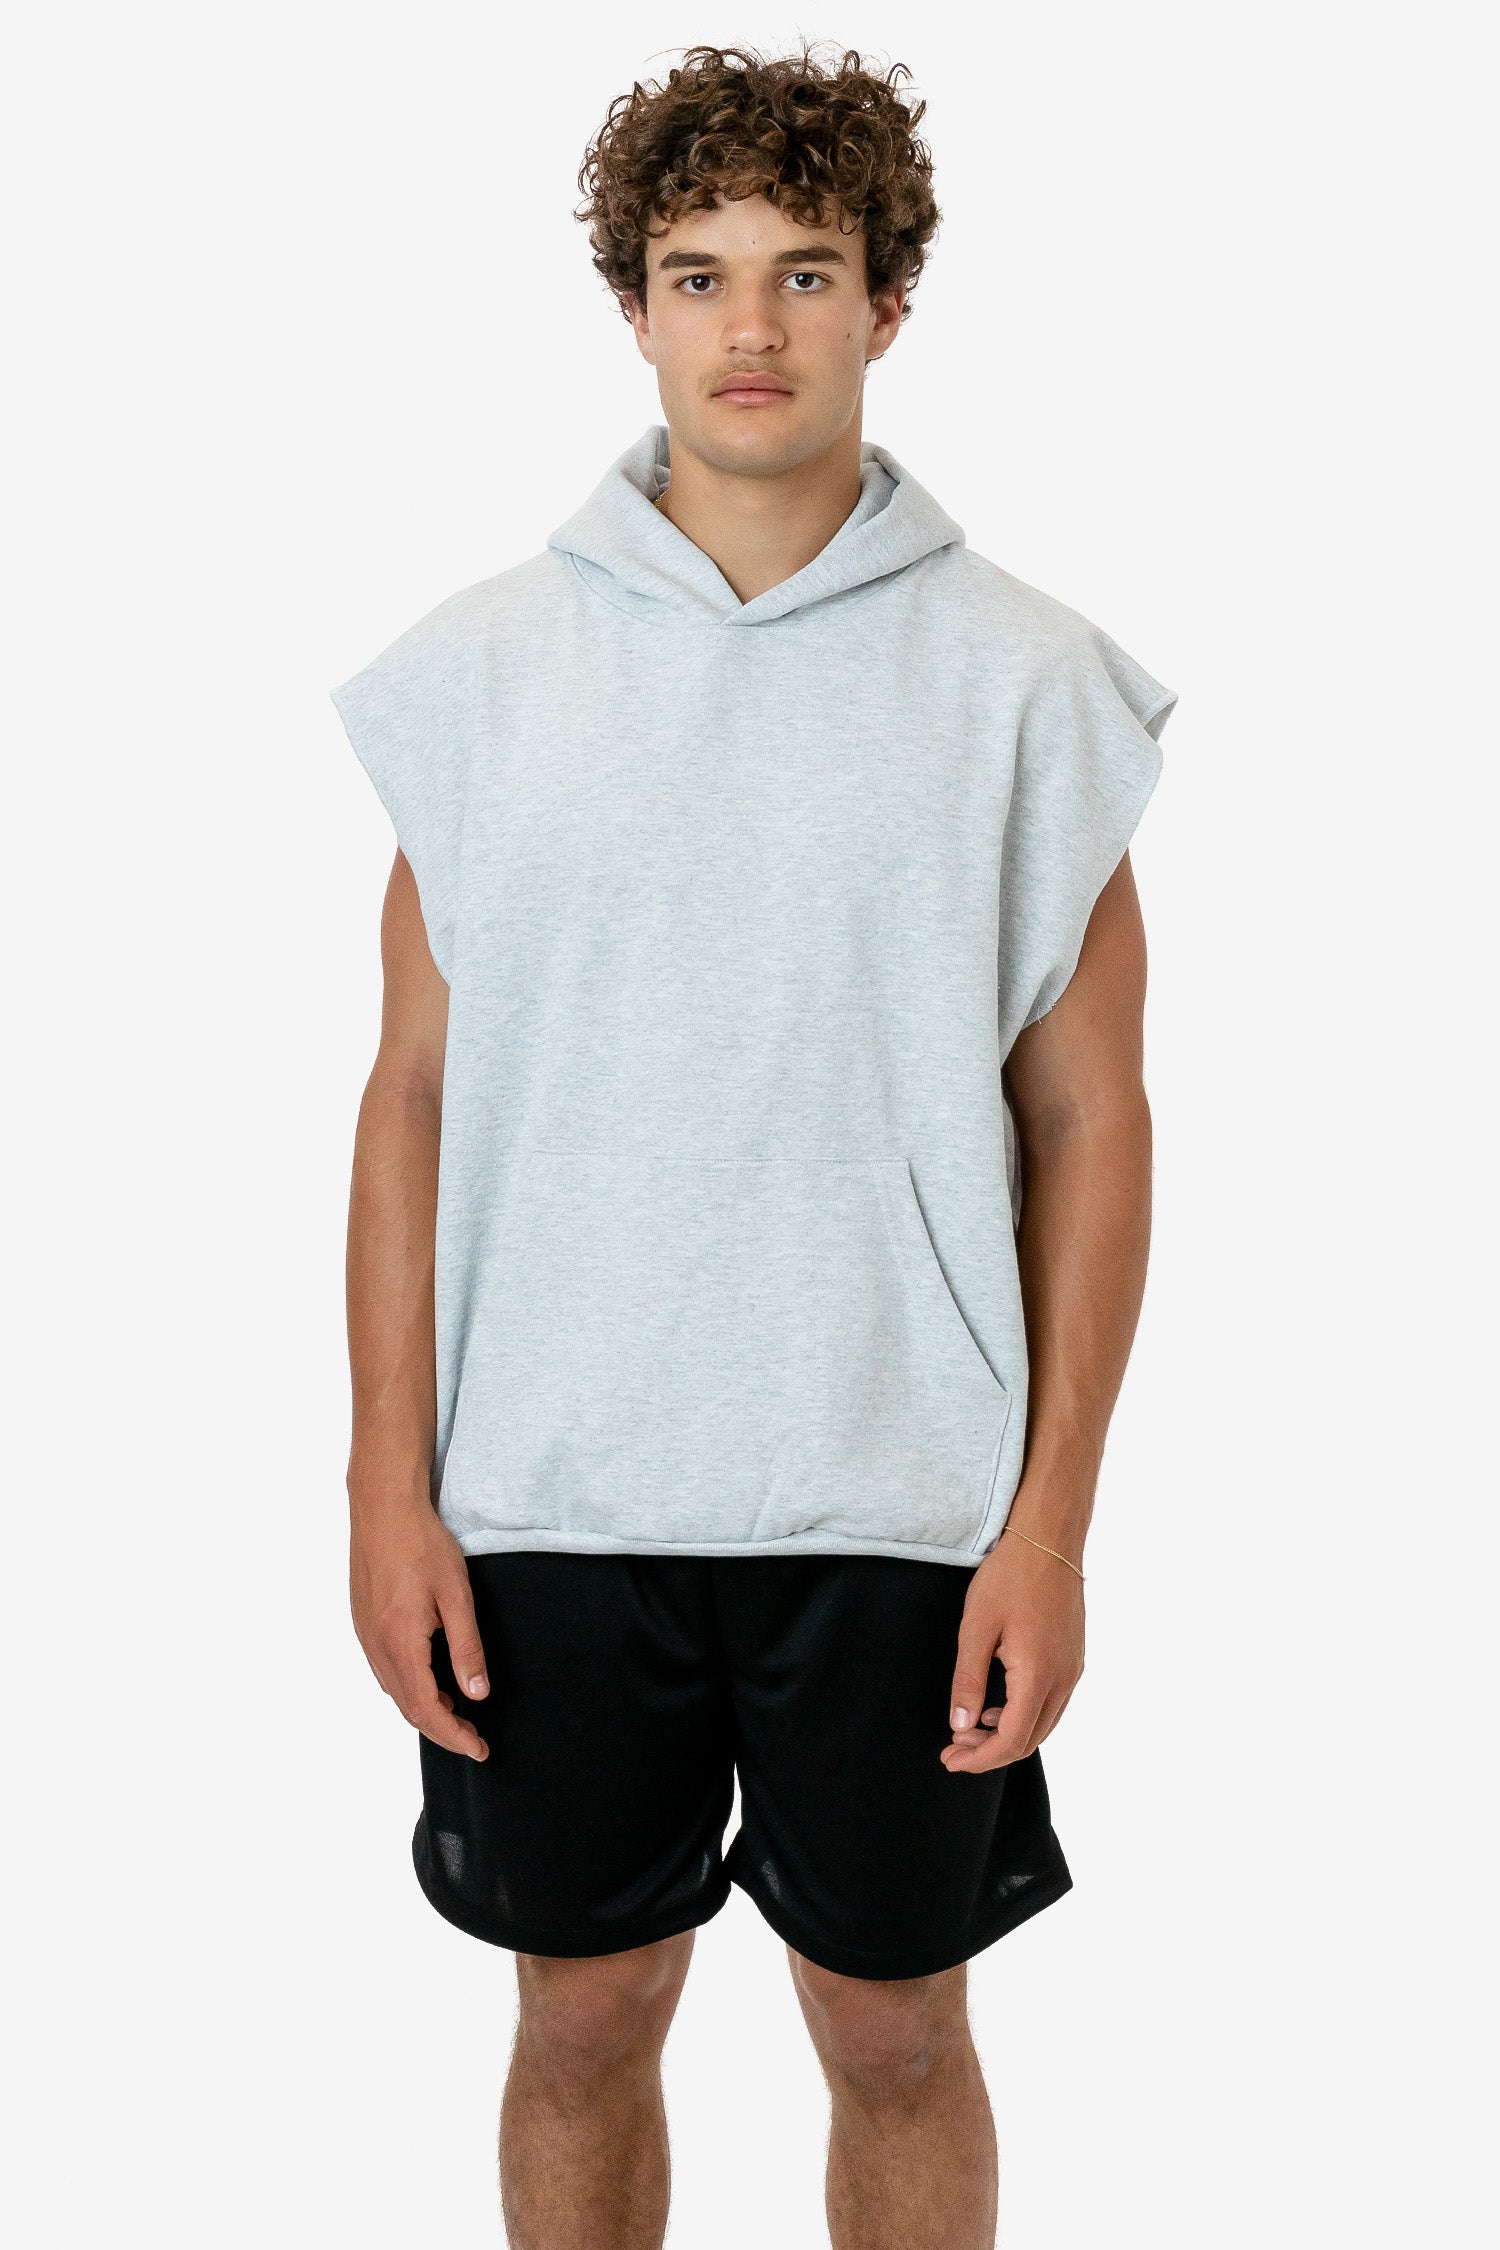 Men's Sweatshirts - Sleeveless & Vests